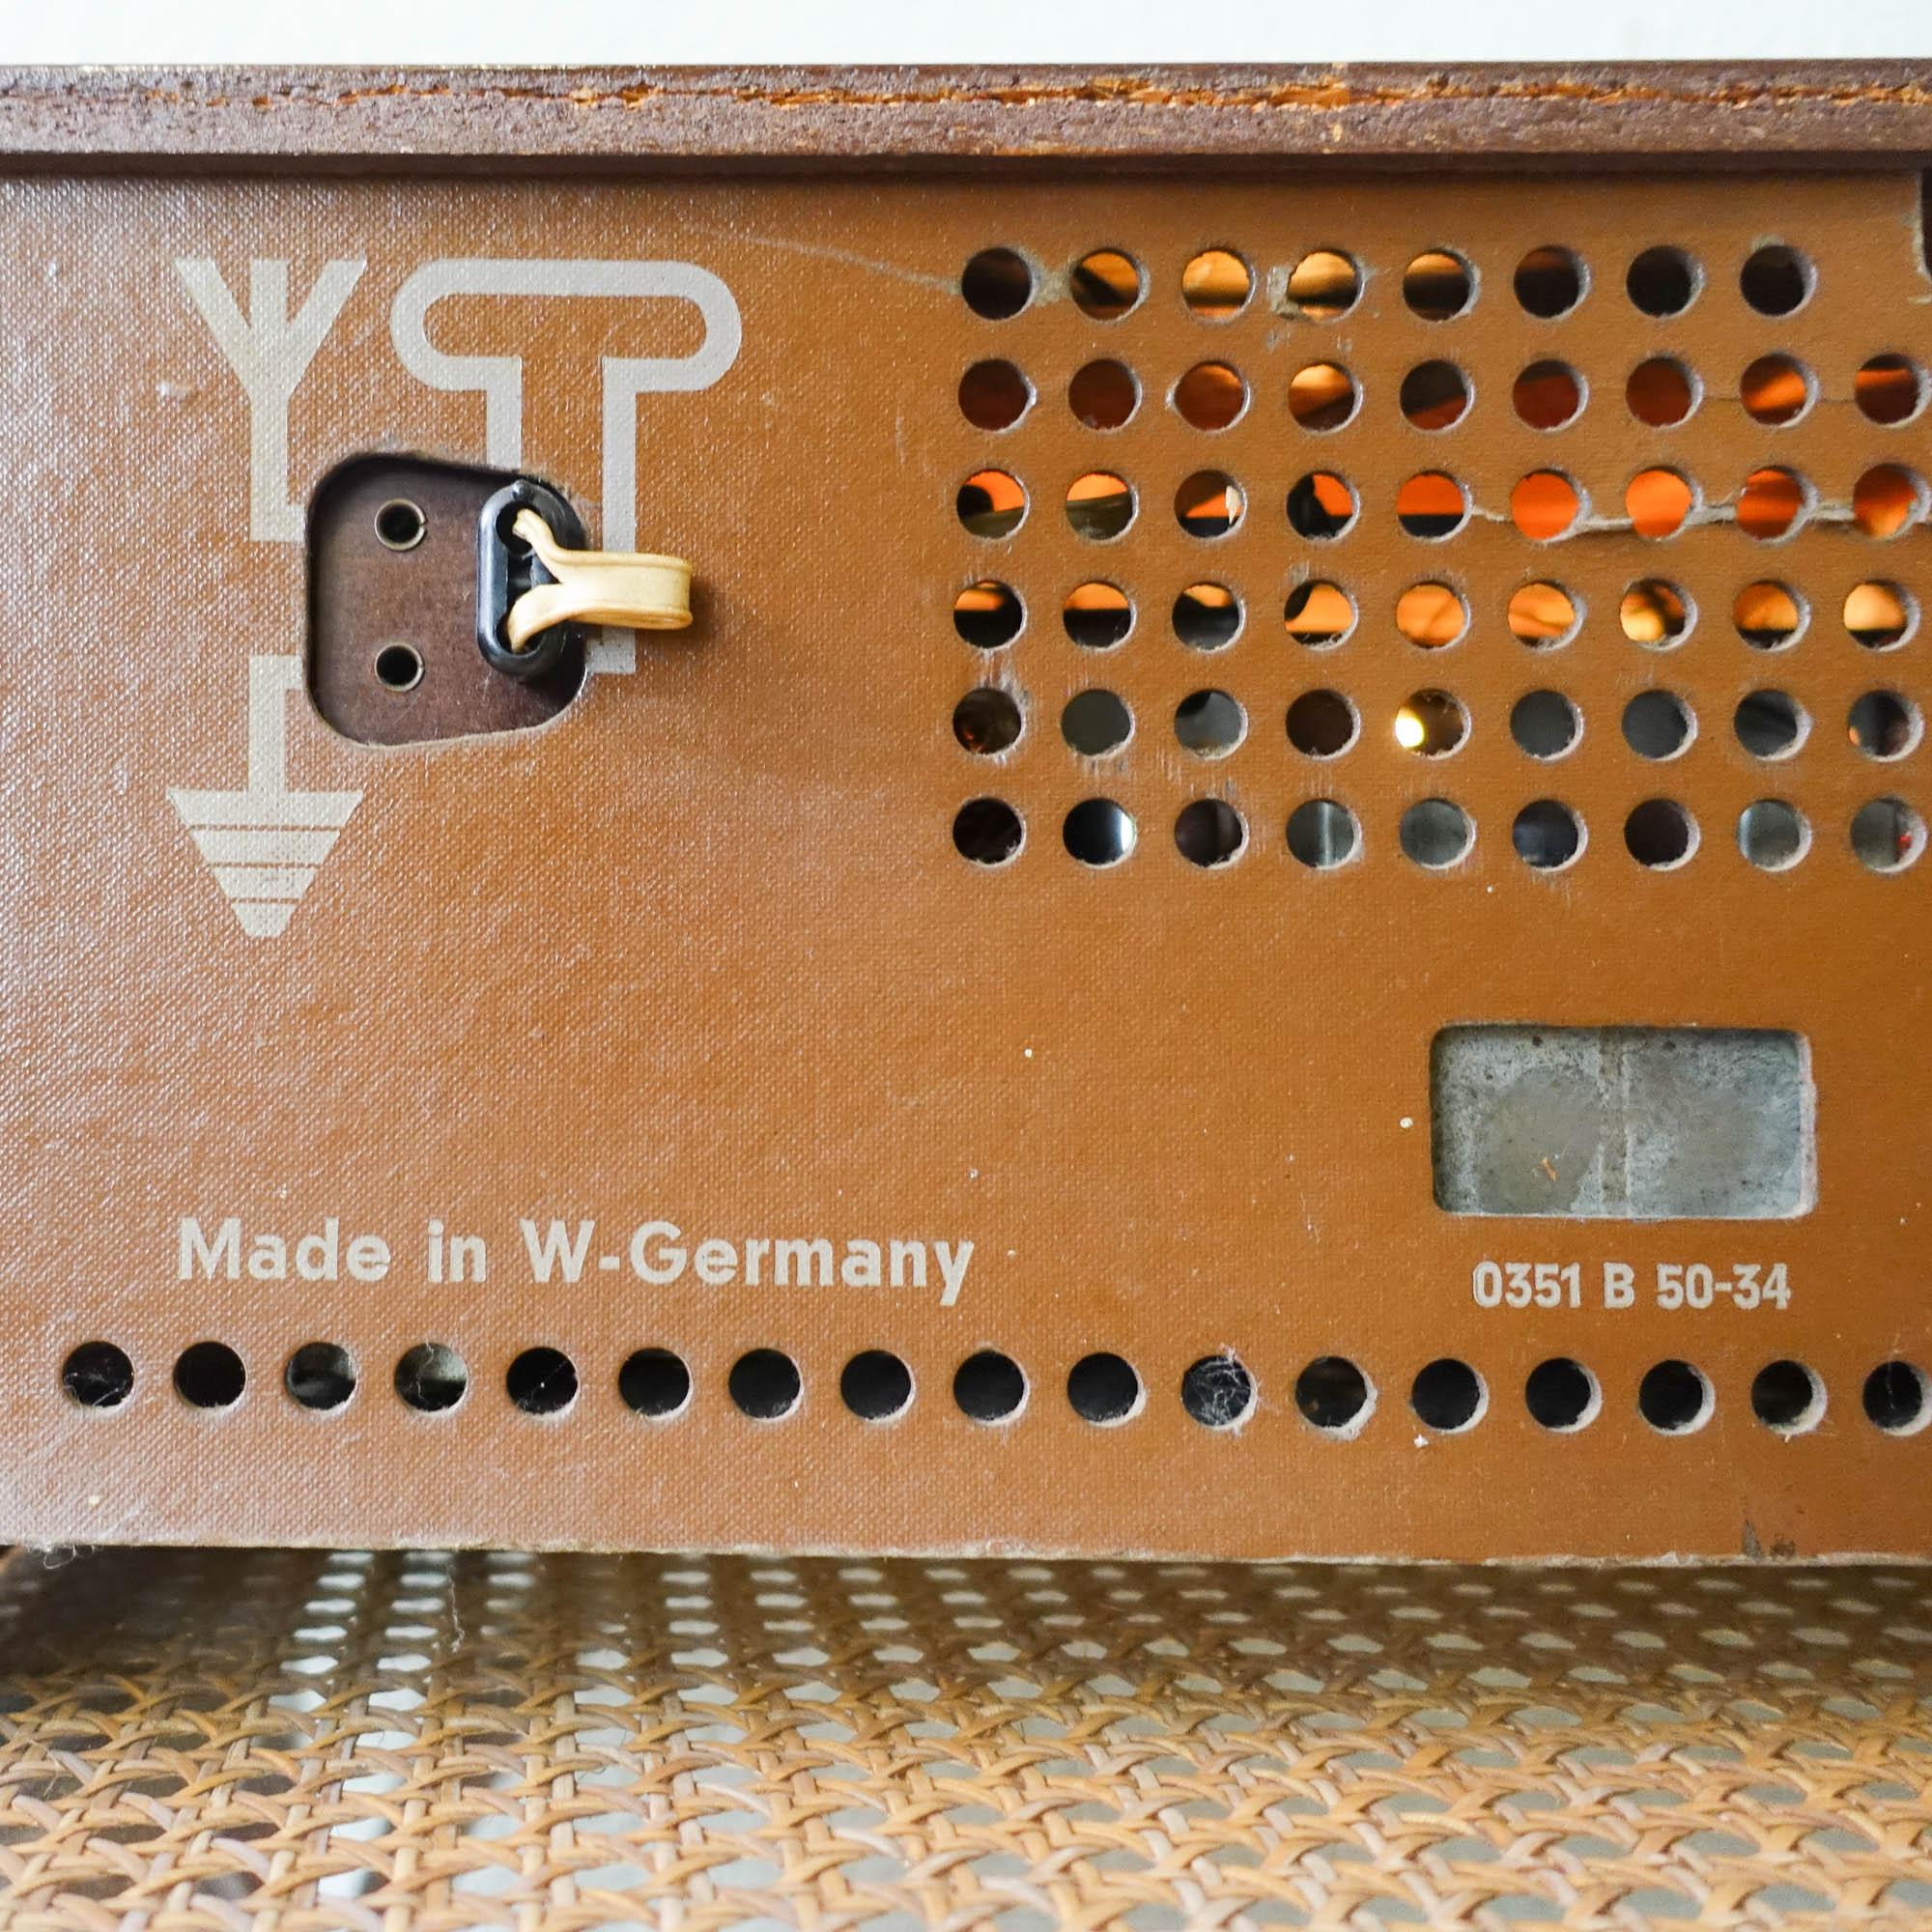 Teak Type 135 Radio from Wega, 1960s For Sale 3